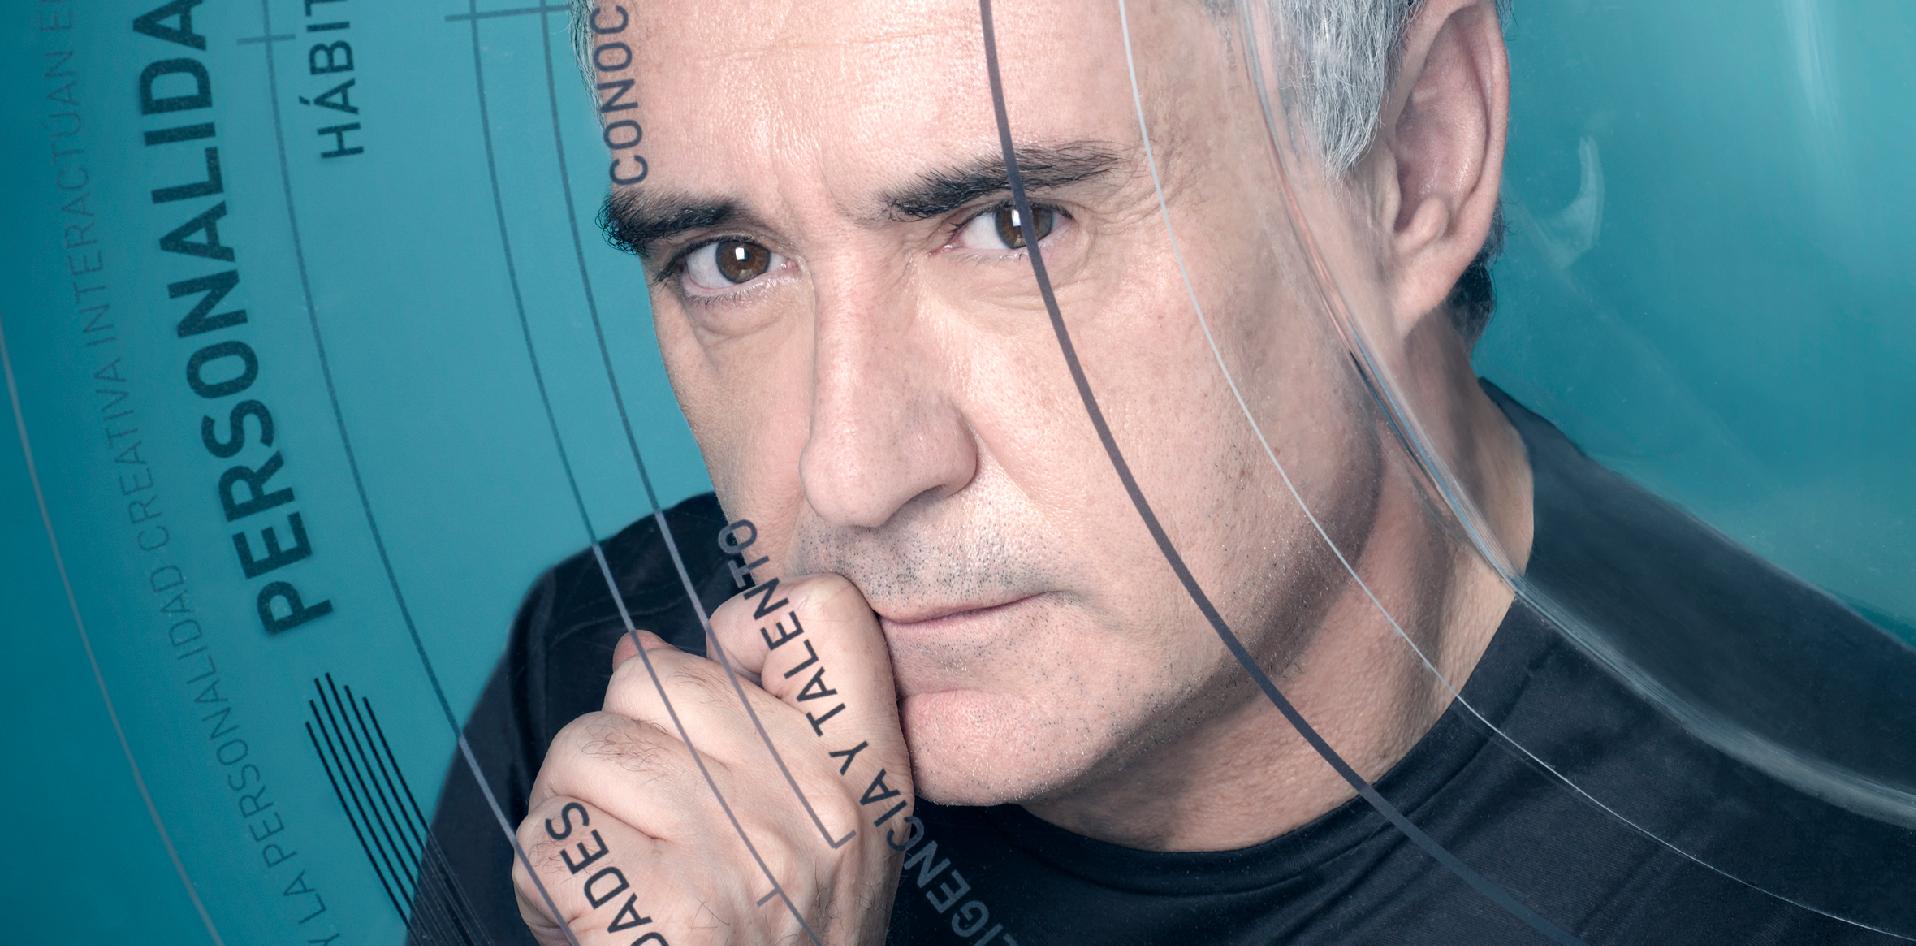 INTI FORUM EXCELENCIA Ferran Adrià